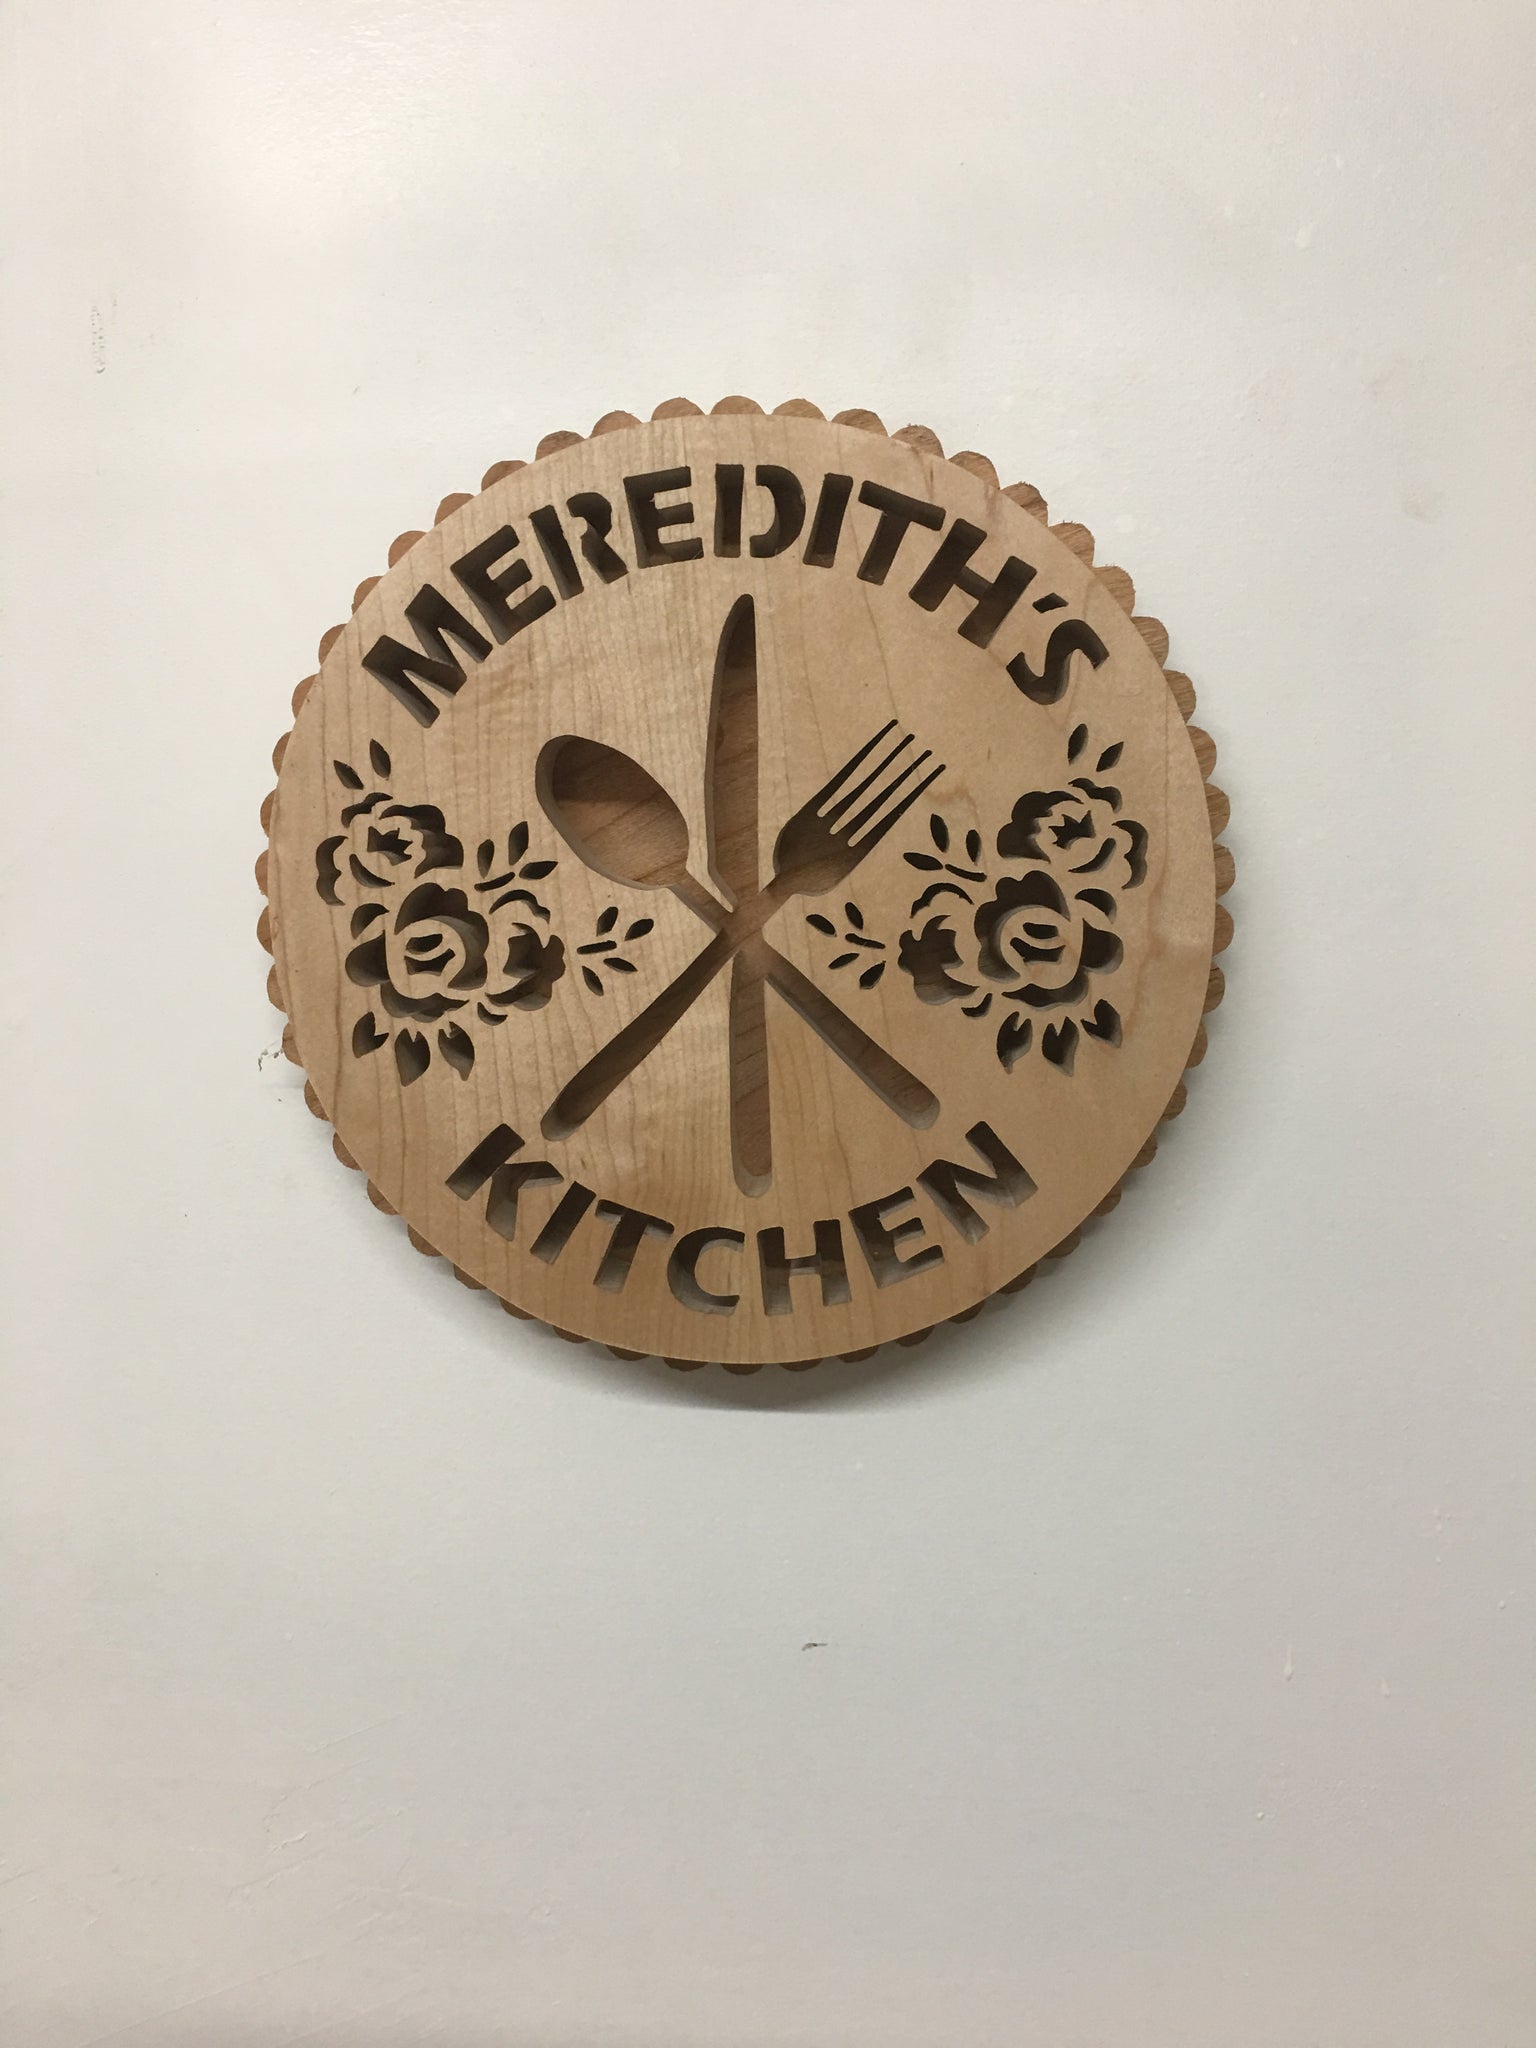 Mother's Kitchen